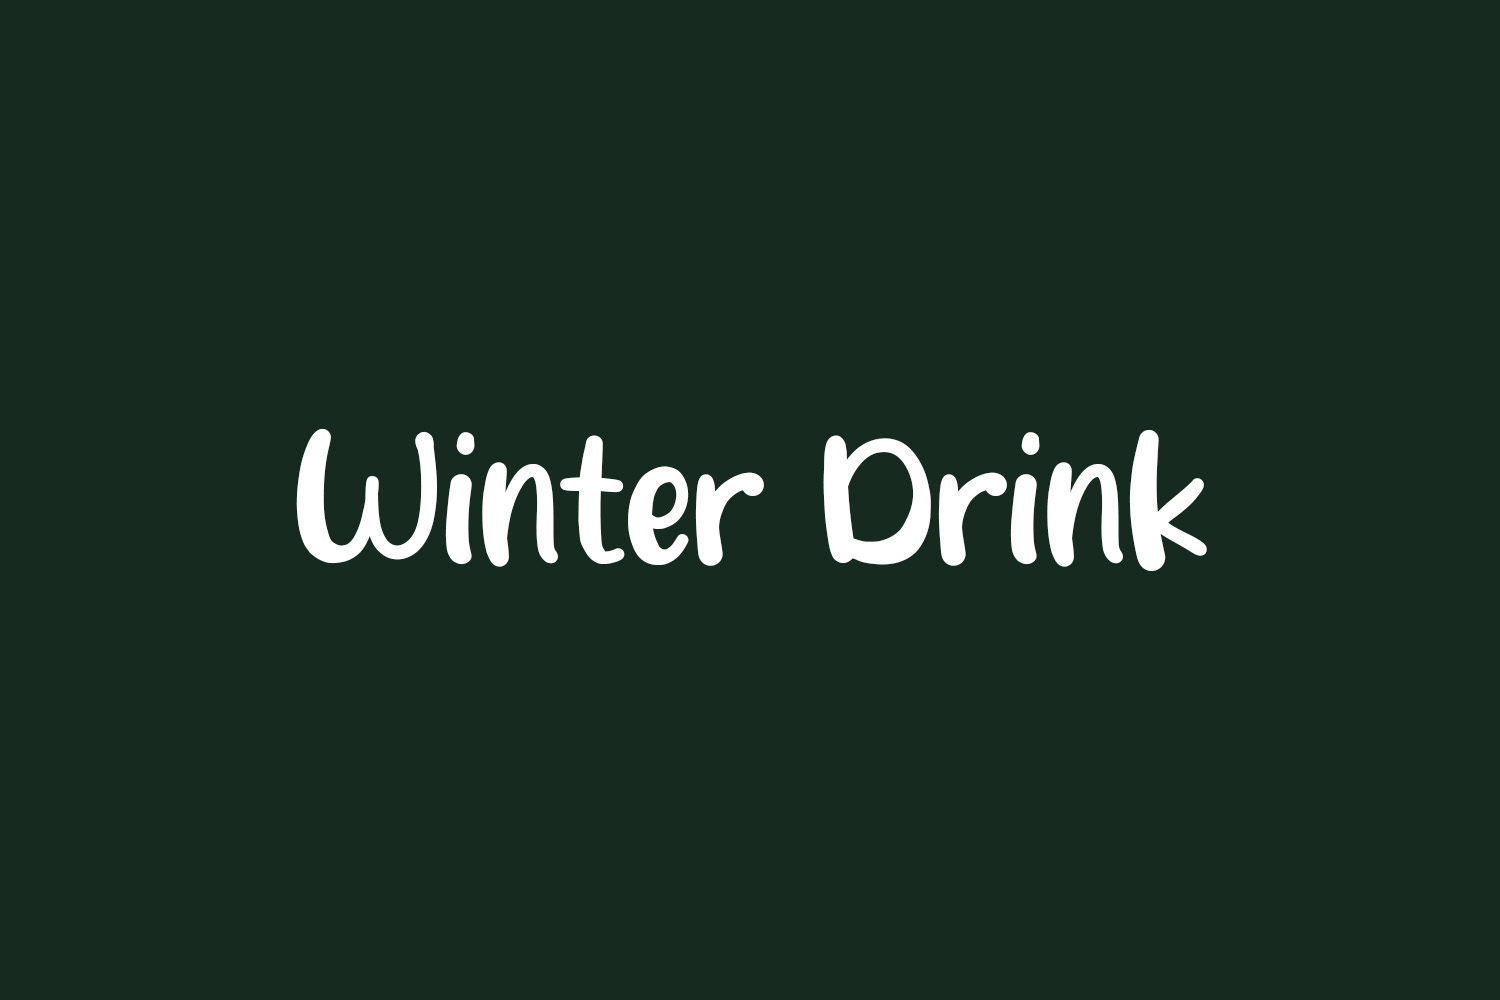 Winter Drink Free Font